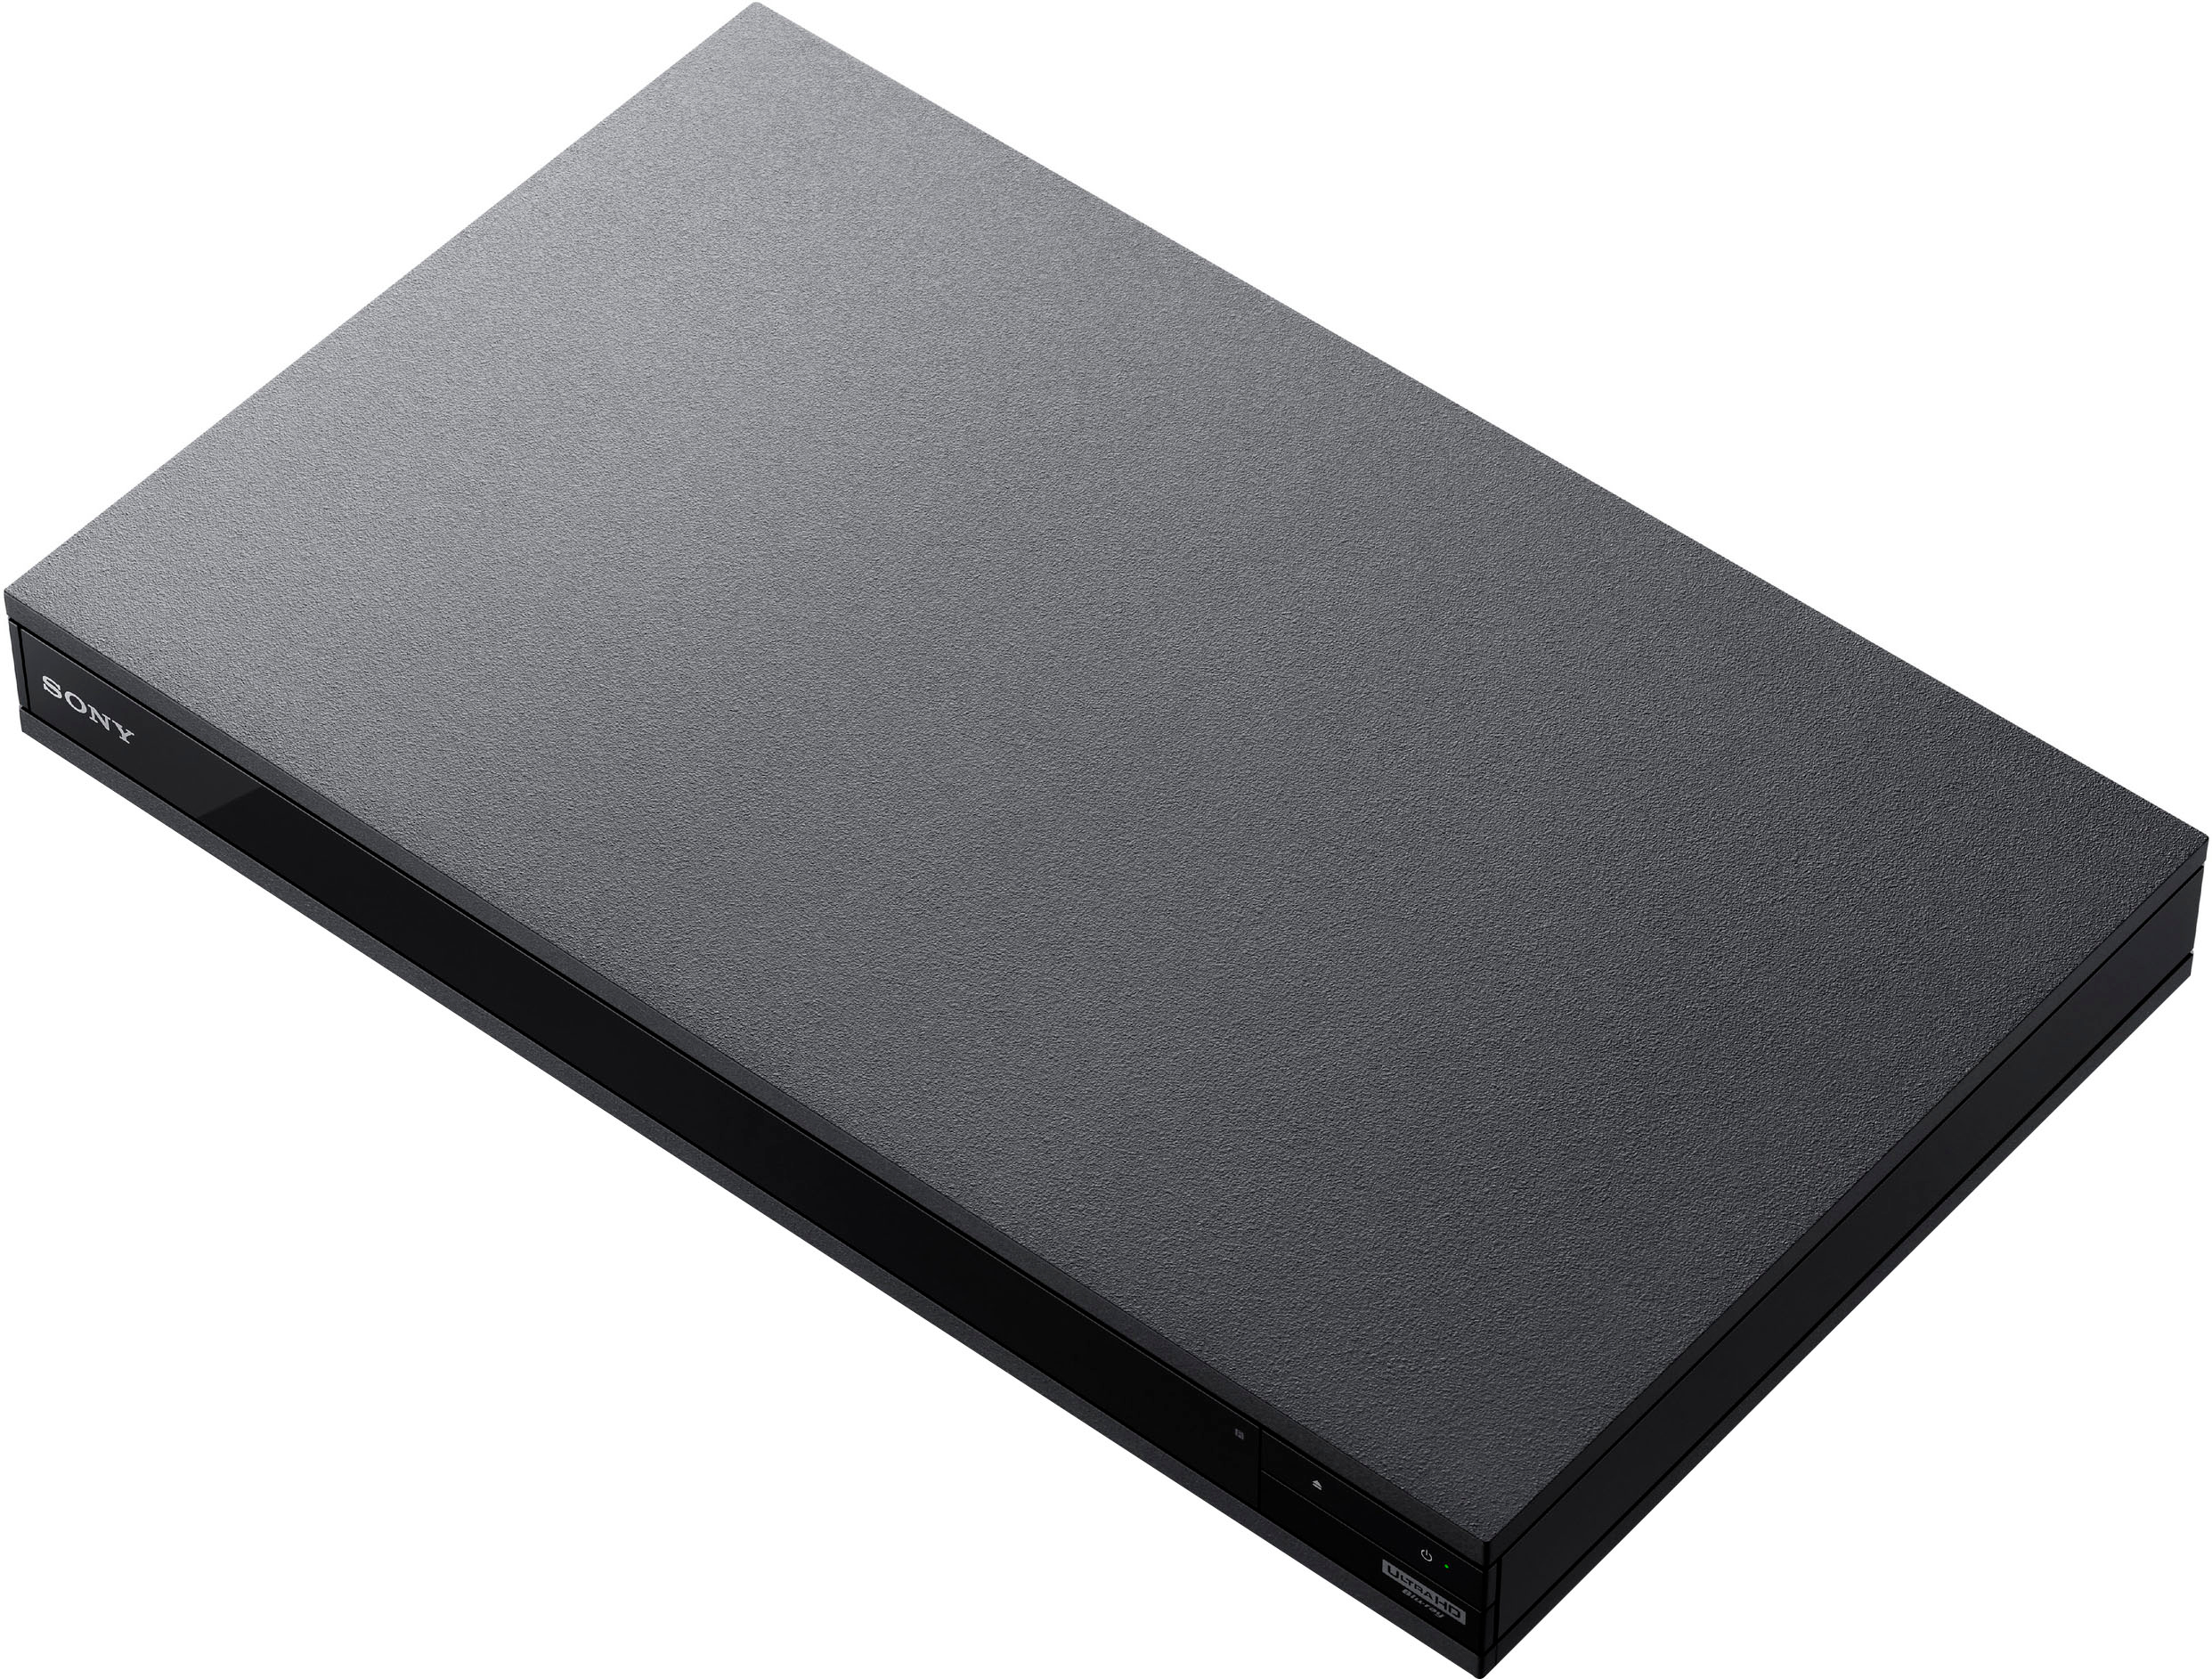 Sony UBP-X800M2 Streaming Wi-Fi Audio Best Player Buy Black Built-In UBPX800M2 - HD 4K Blu-Ray Ultra Hi-Res